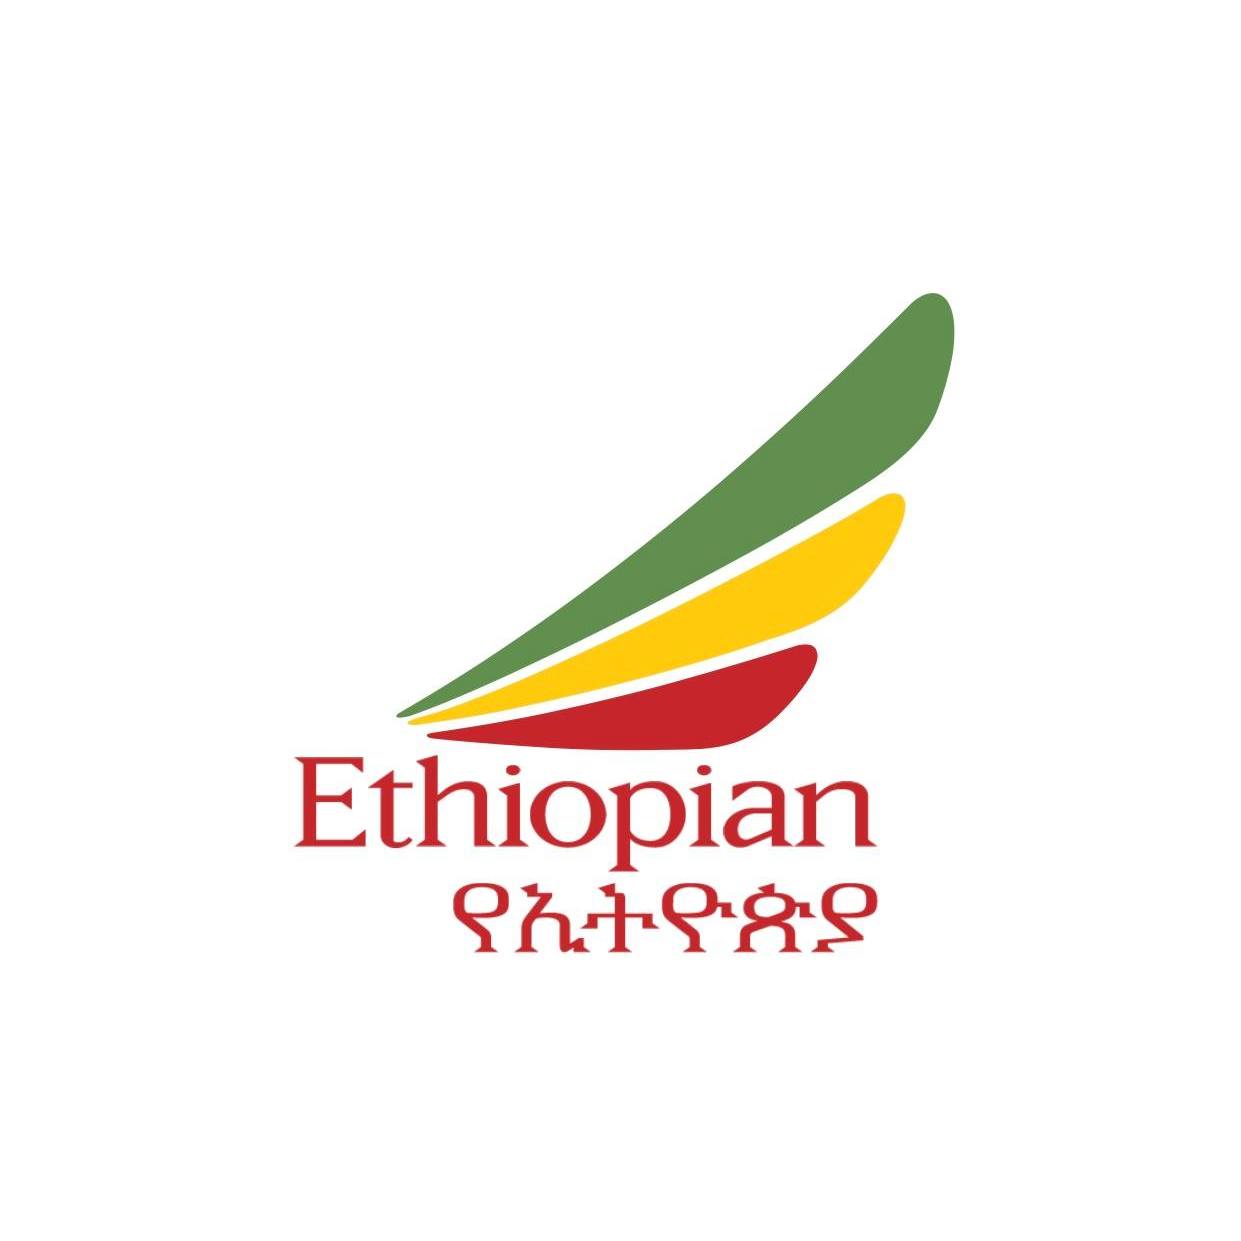 Ethiopian Airlines Press Release 